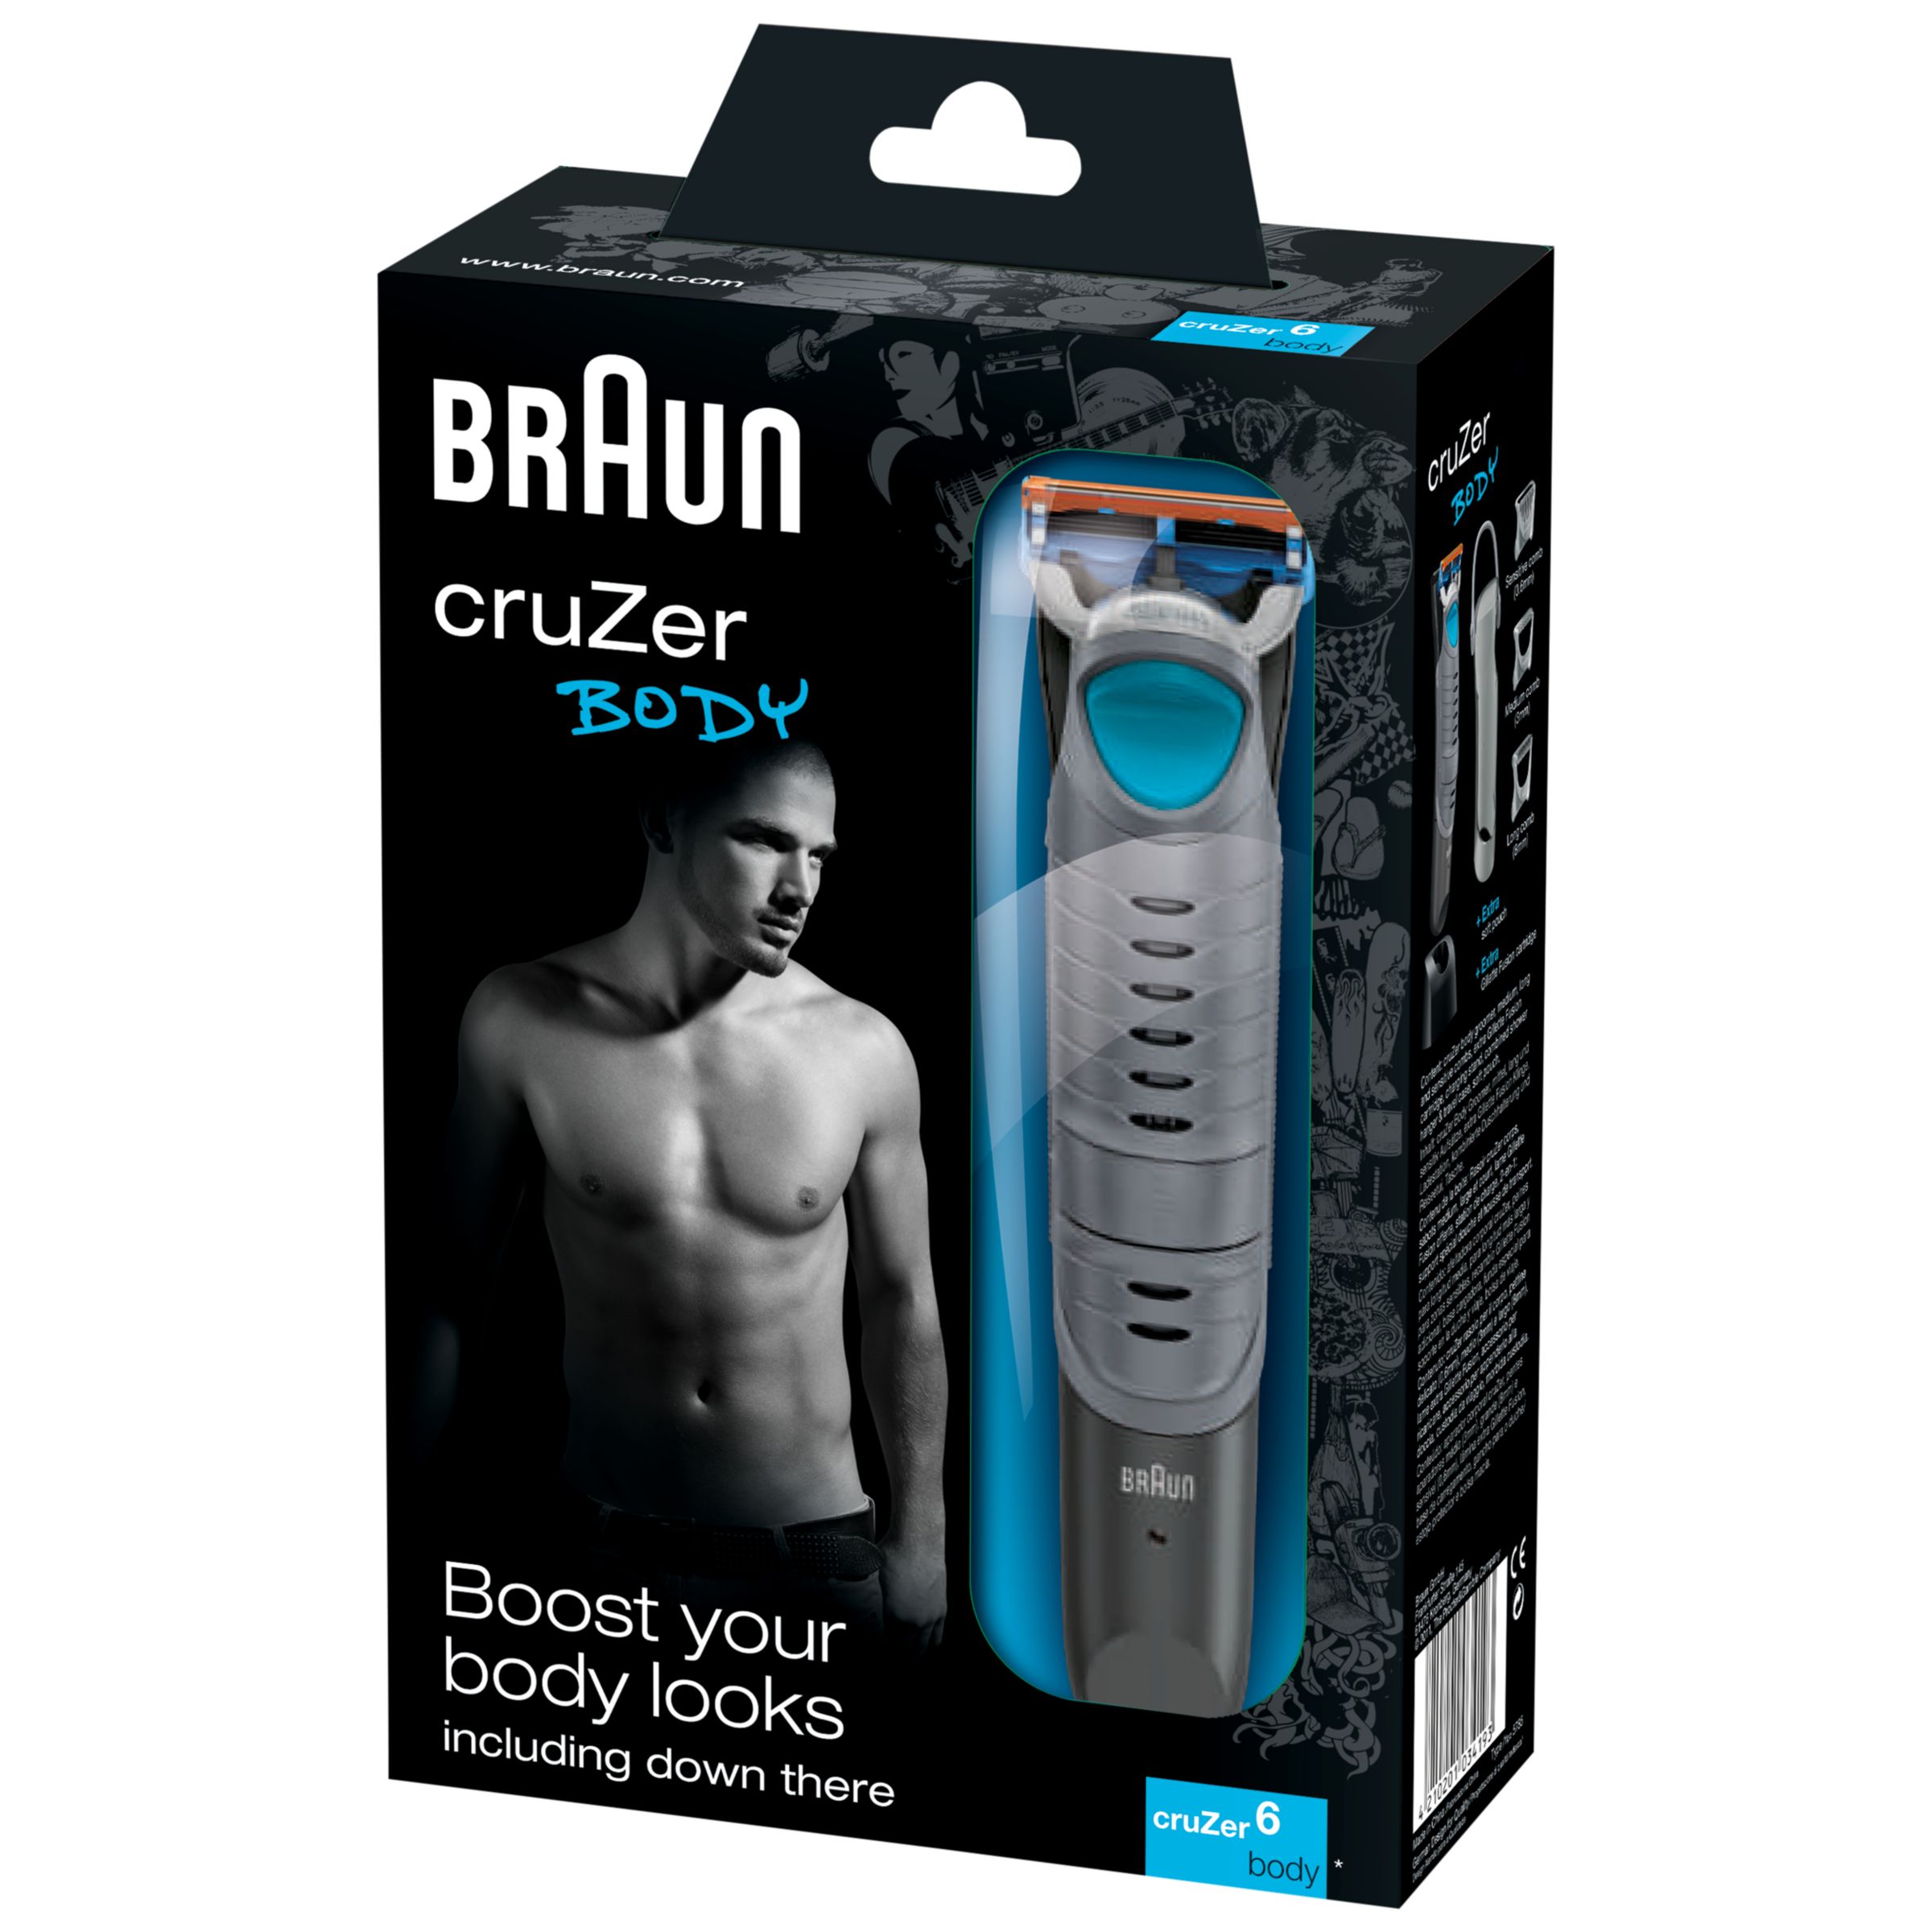 cruzer body braun